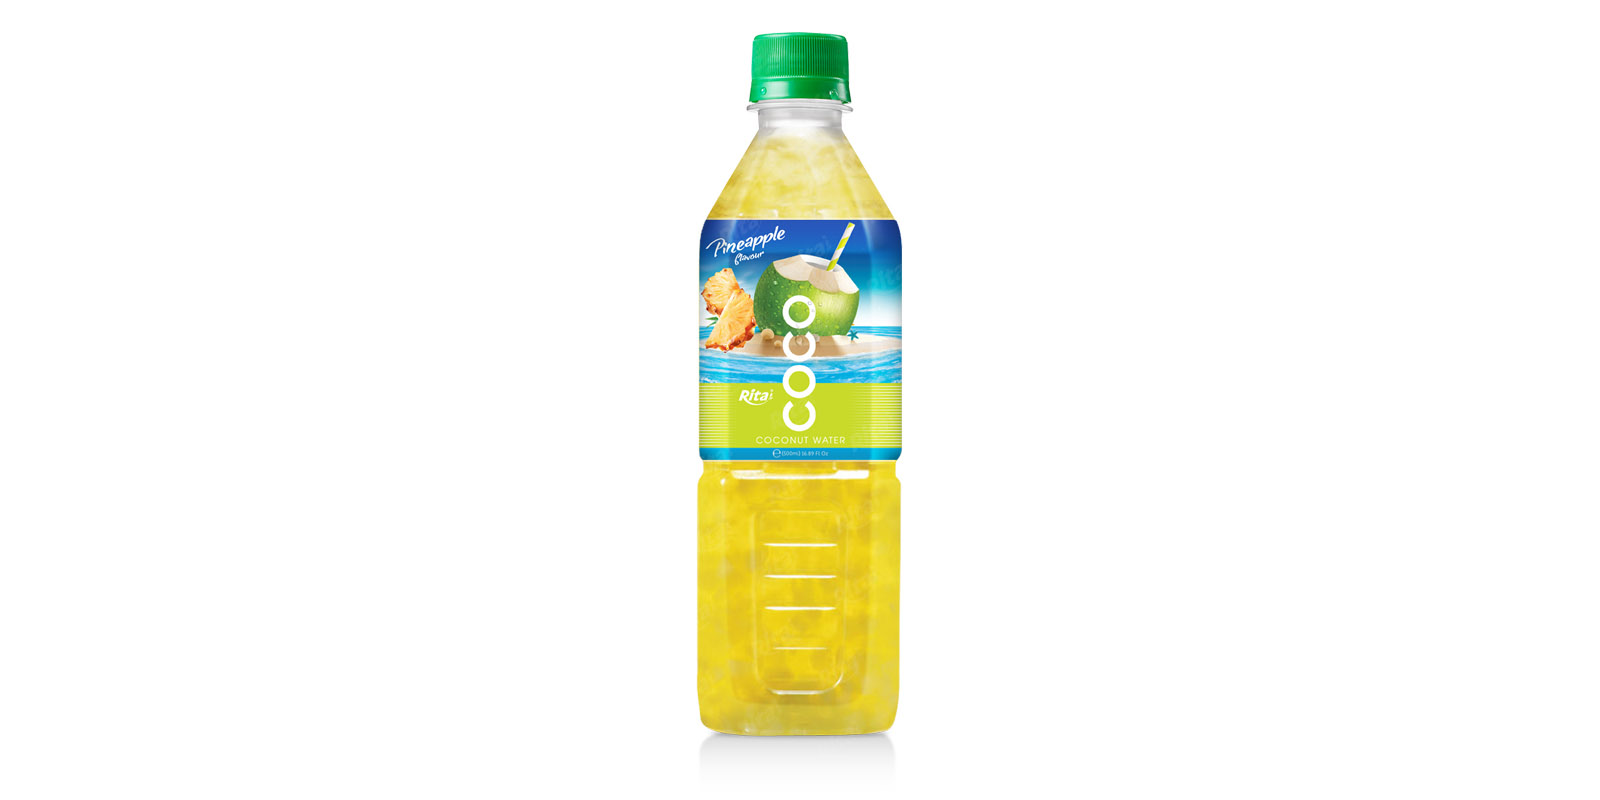 Coconut water with pineapple flavor  500ml Pet bottle 